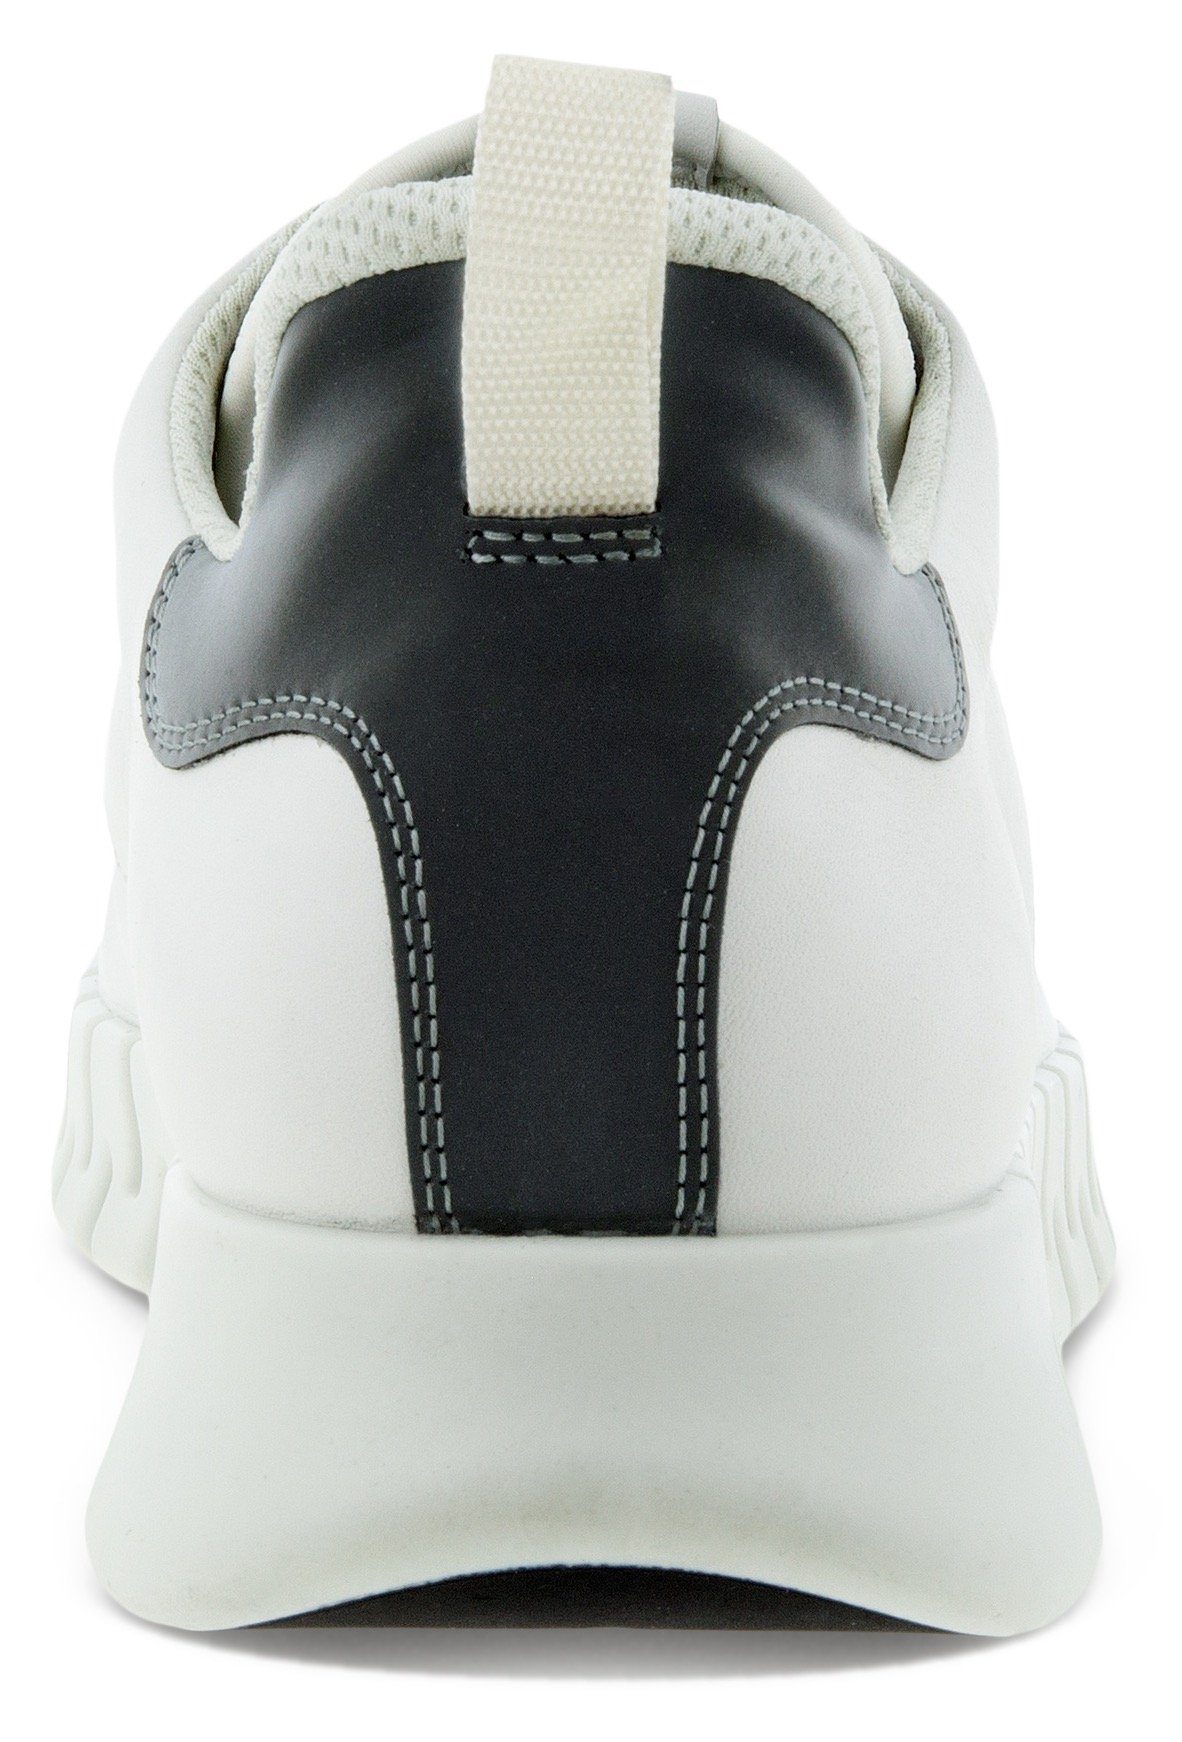 Ecco GRUUV M weiß mit fit-Innensohle herausnehmbarer dual Sneaker